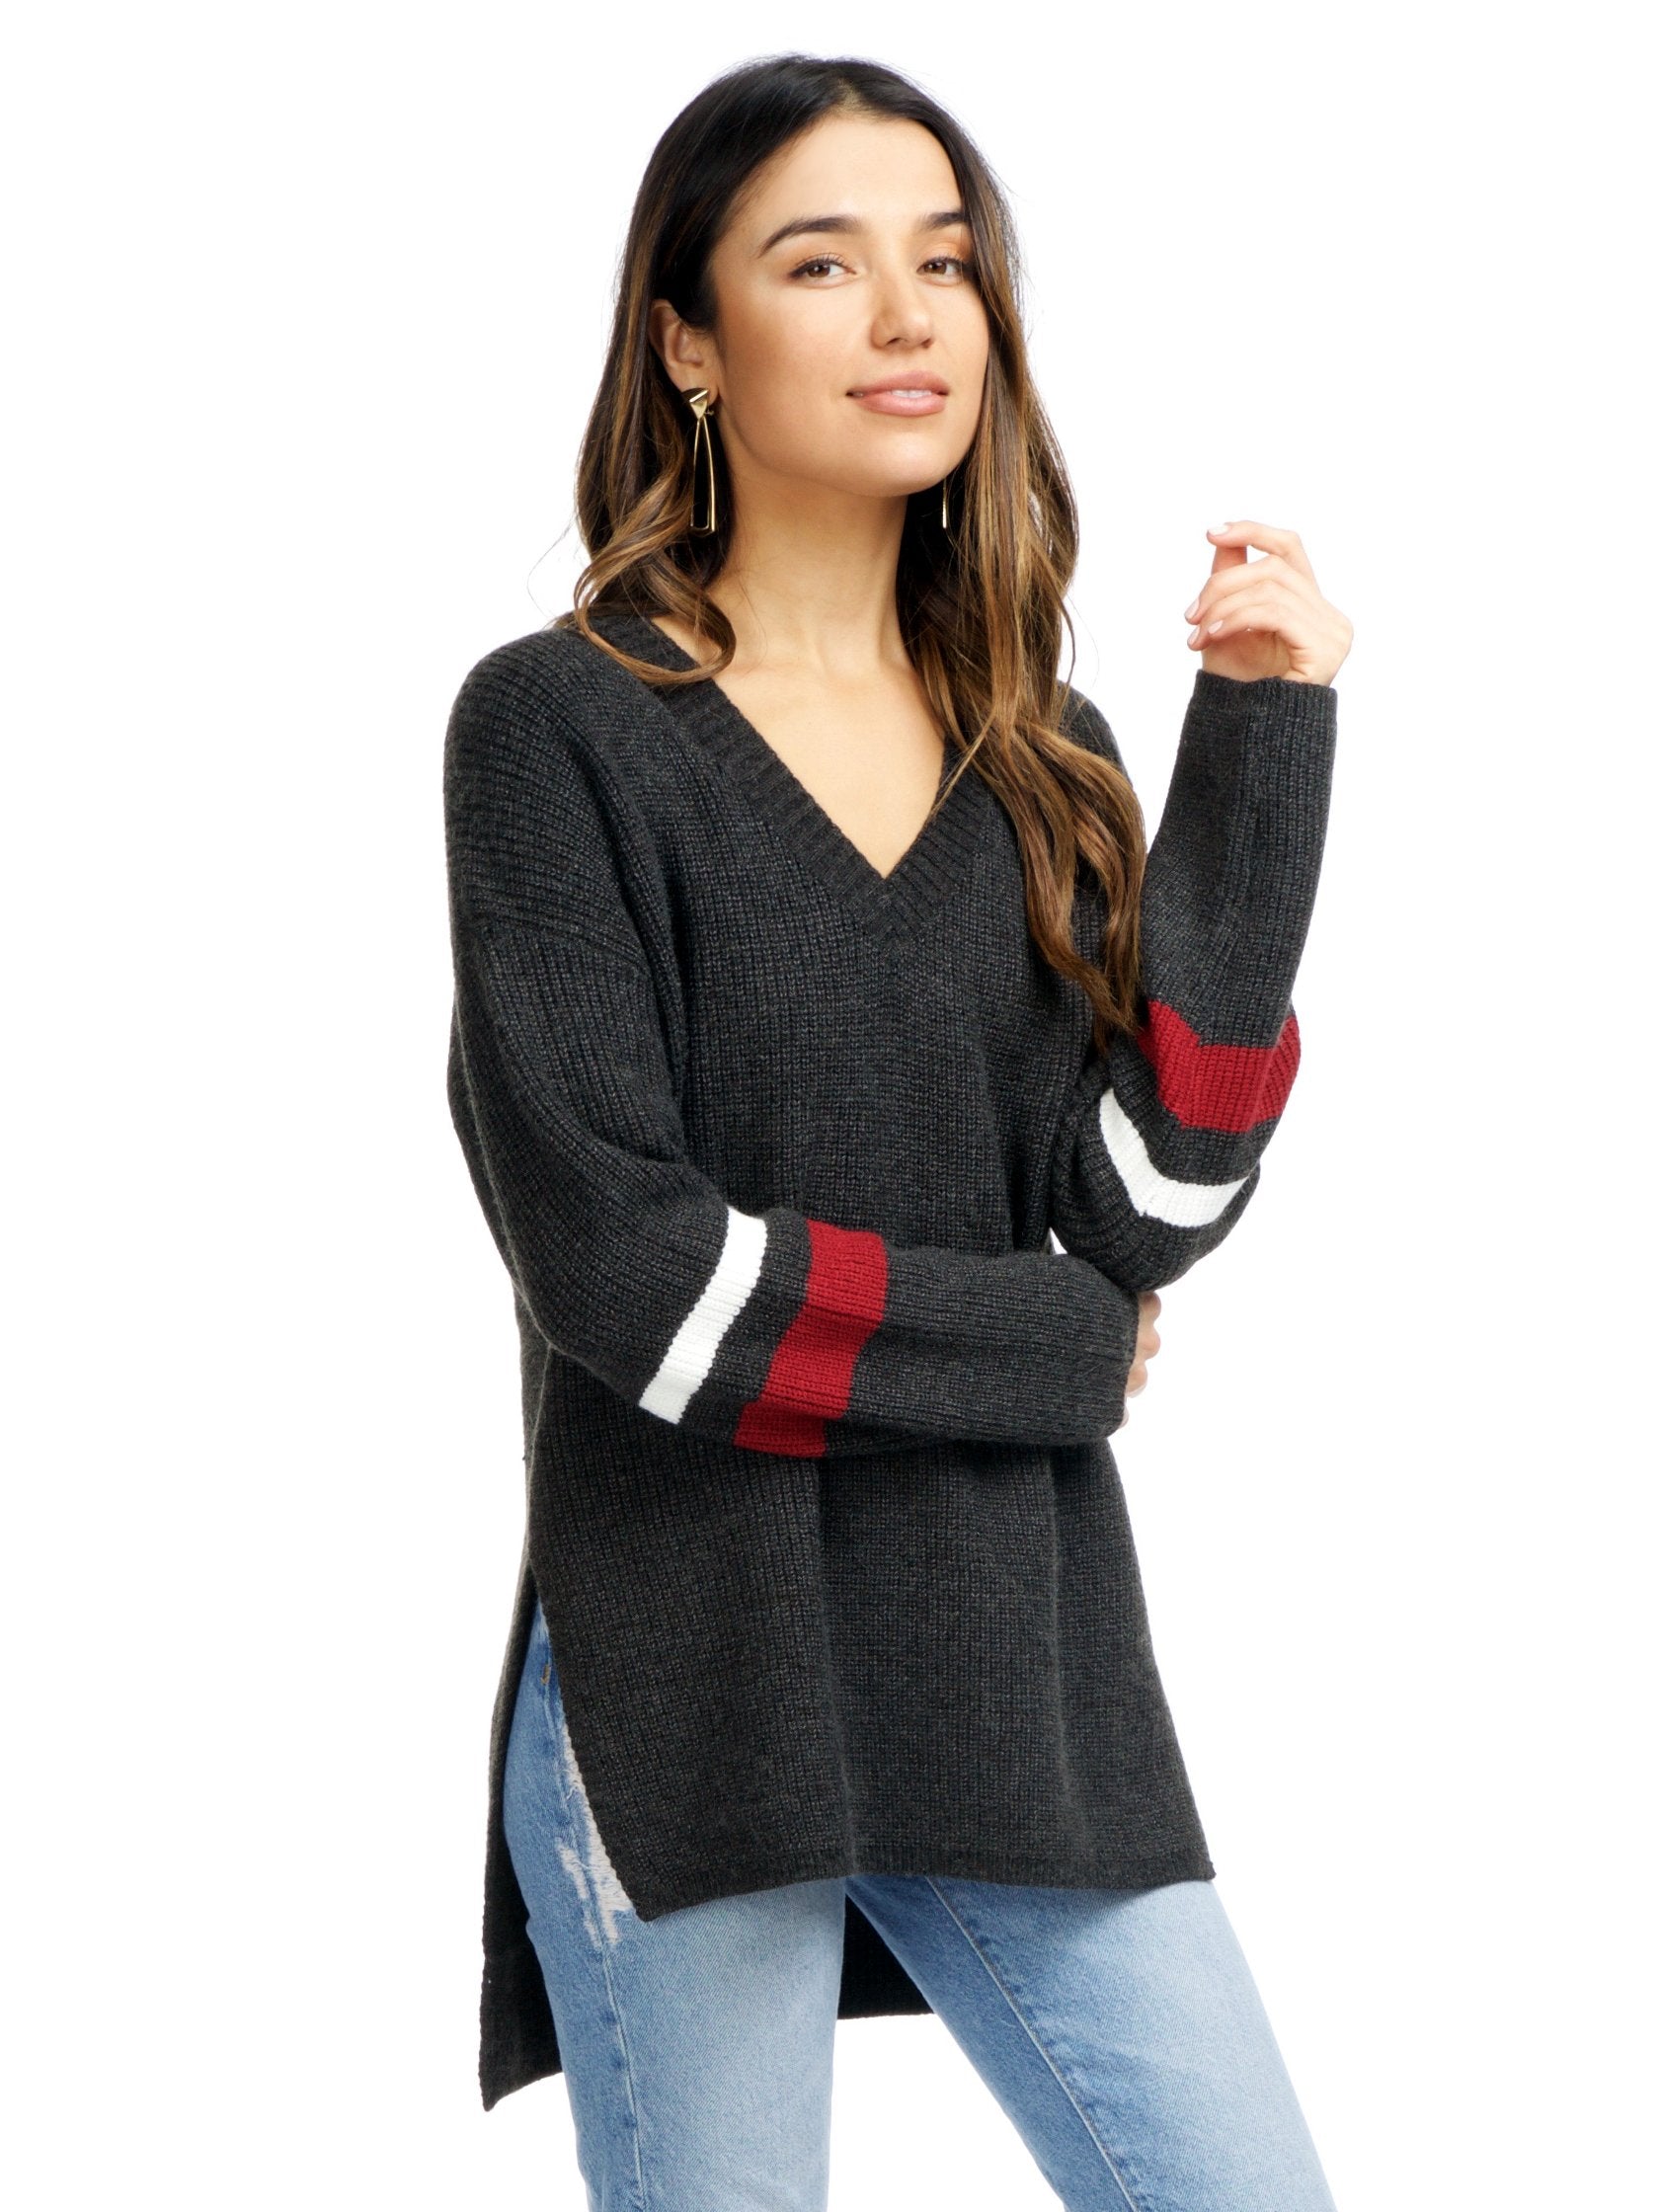 Women wearing a sweater rental from Strut & Bolt called Cutout Stripe Sweater